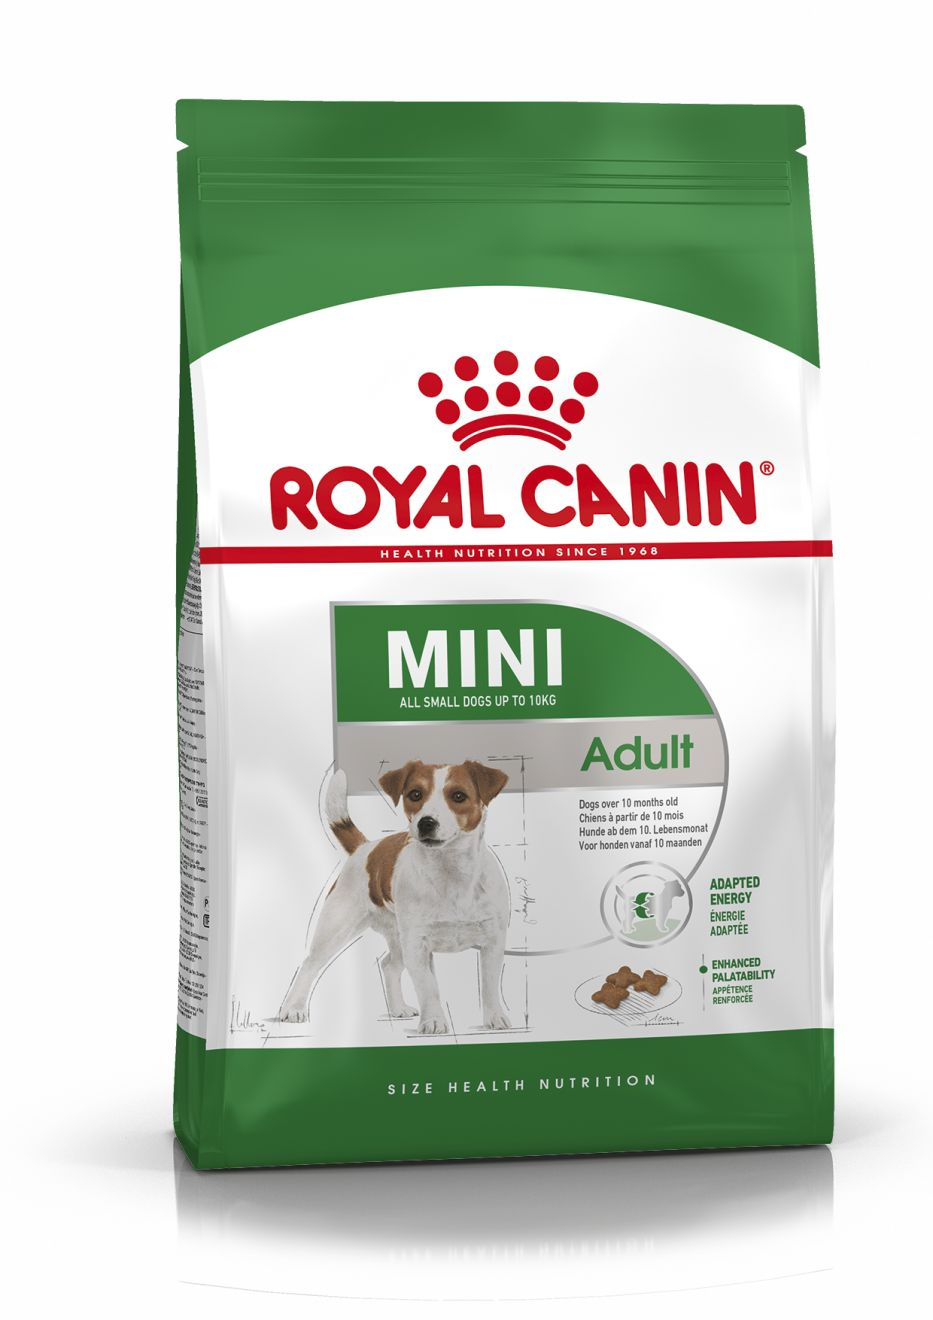 royal canin puppy 8 kg